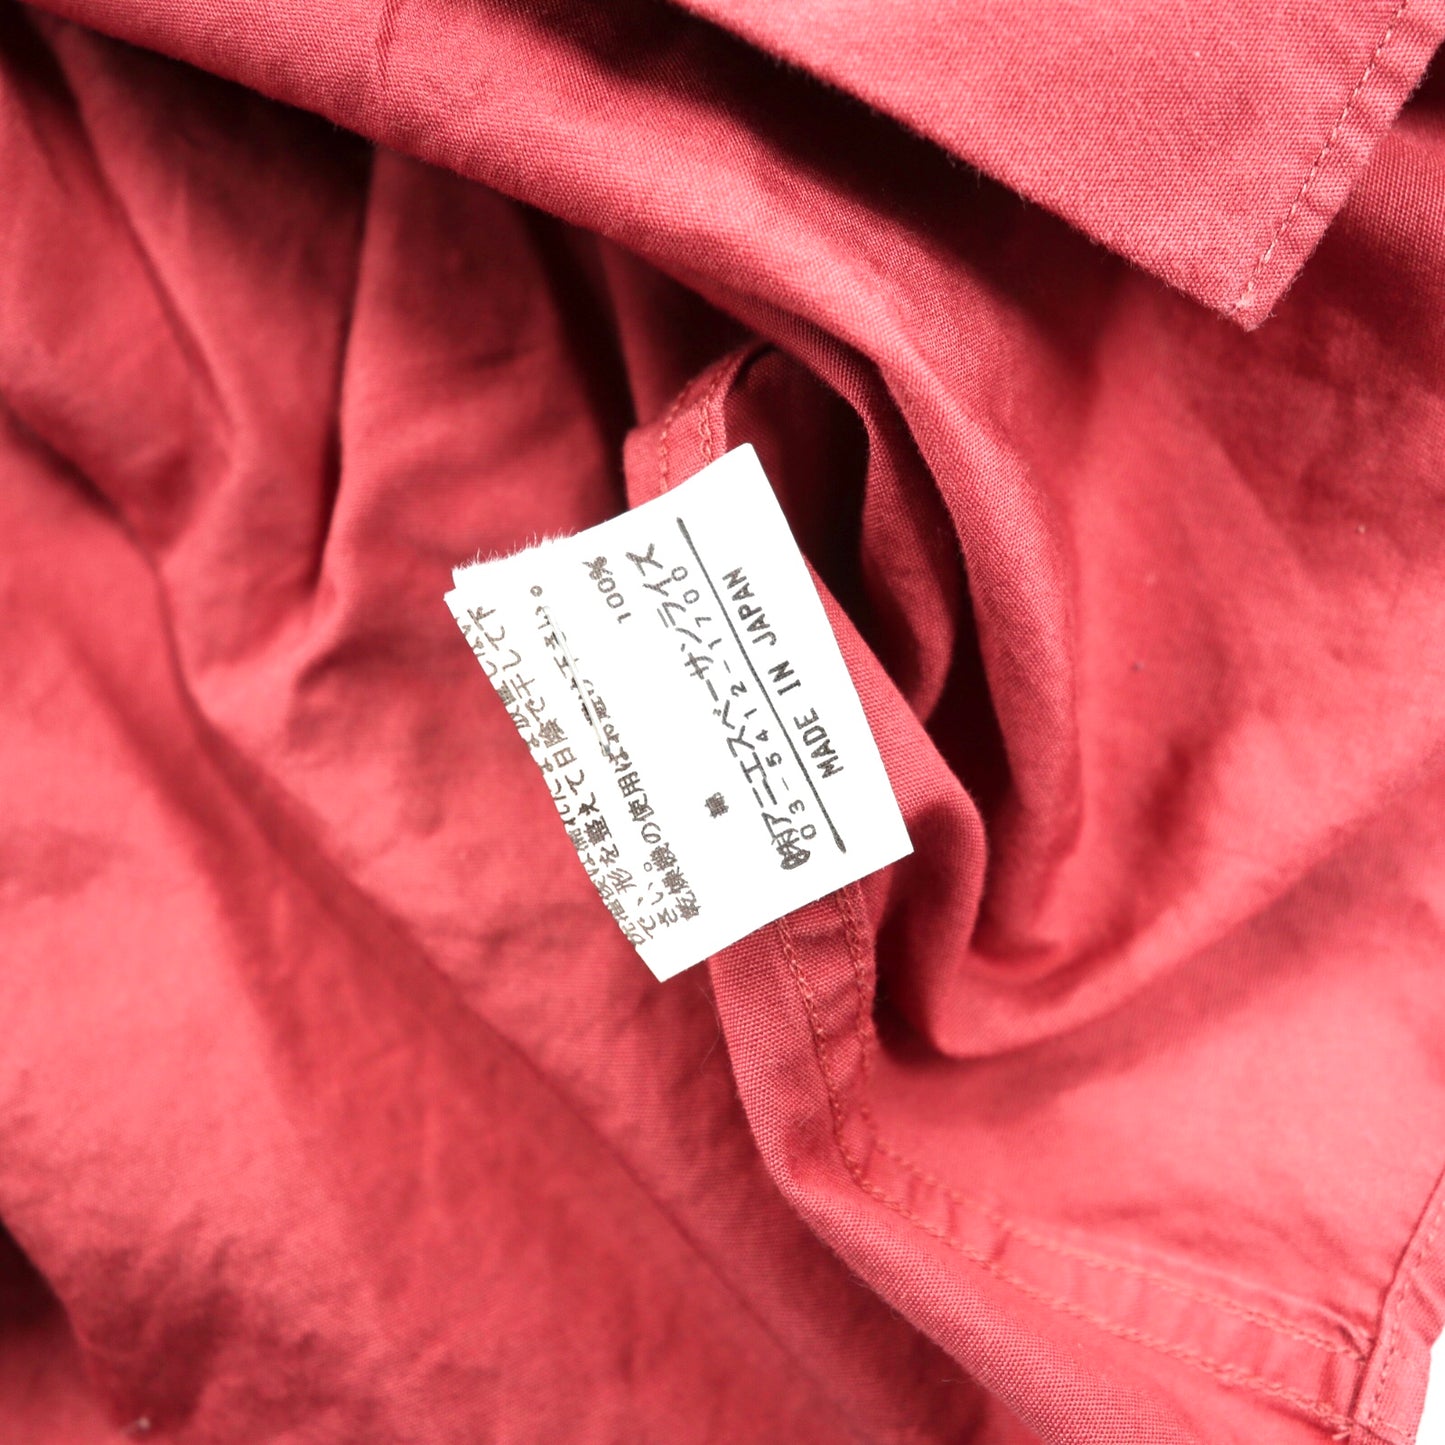 agnes b. homme PARIS ドレスシャツ 40 ピンク コットン 日本製